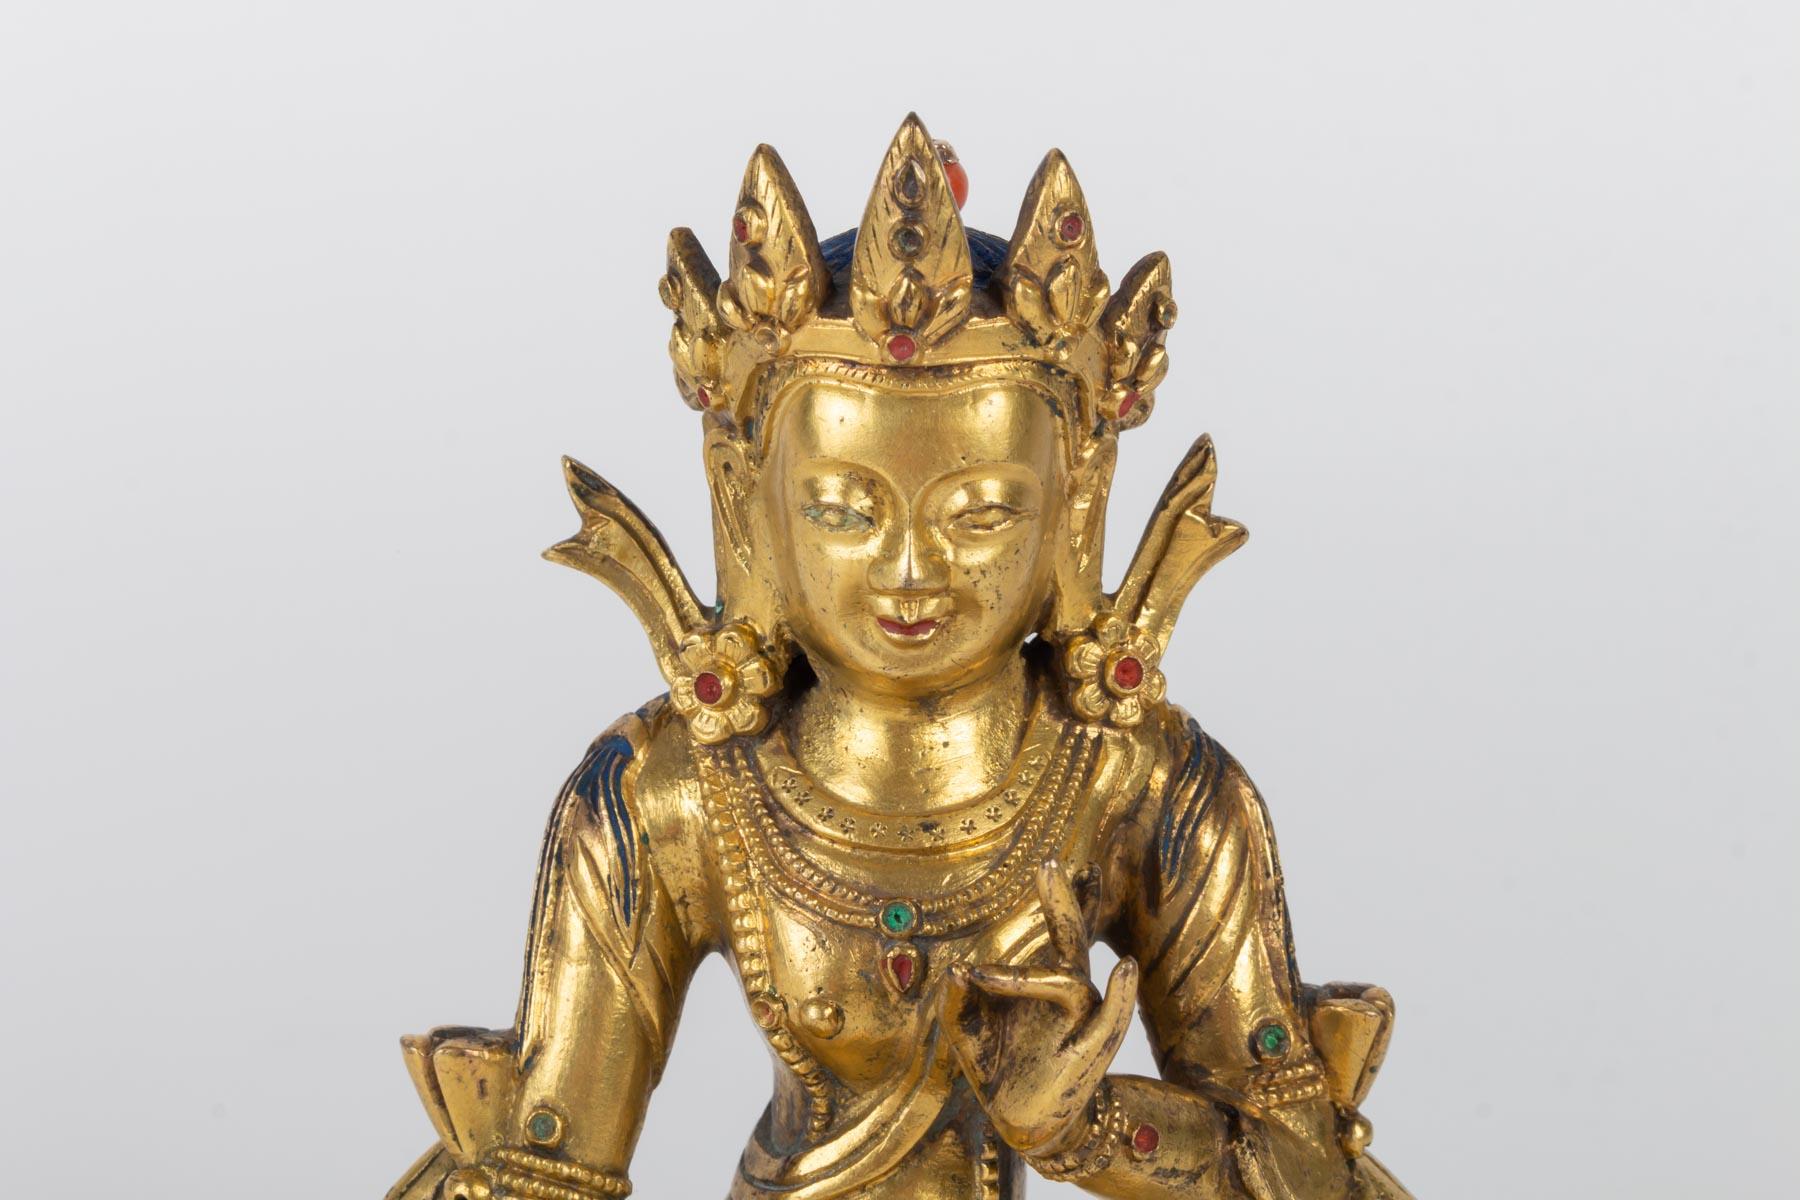 Golden bronze Buddha, China, 17th-18th century
Measures: H 14cm, W 10cm, D 9cm.